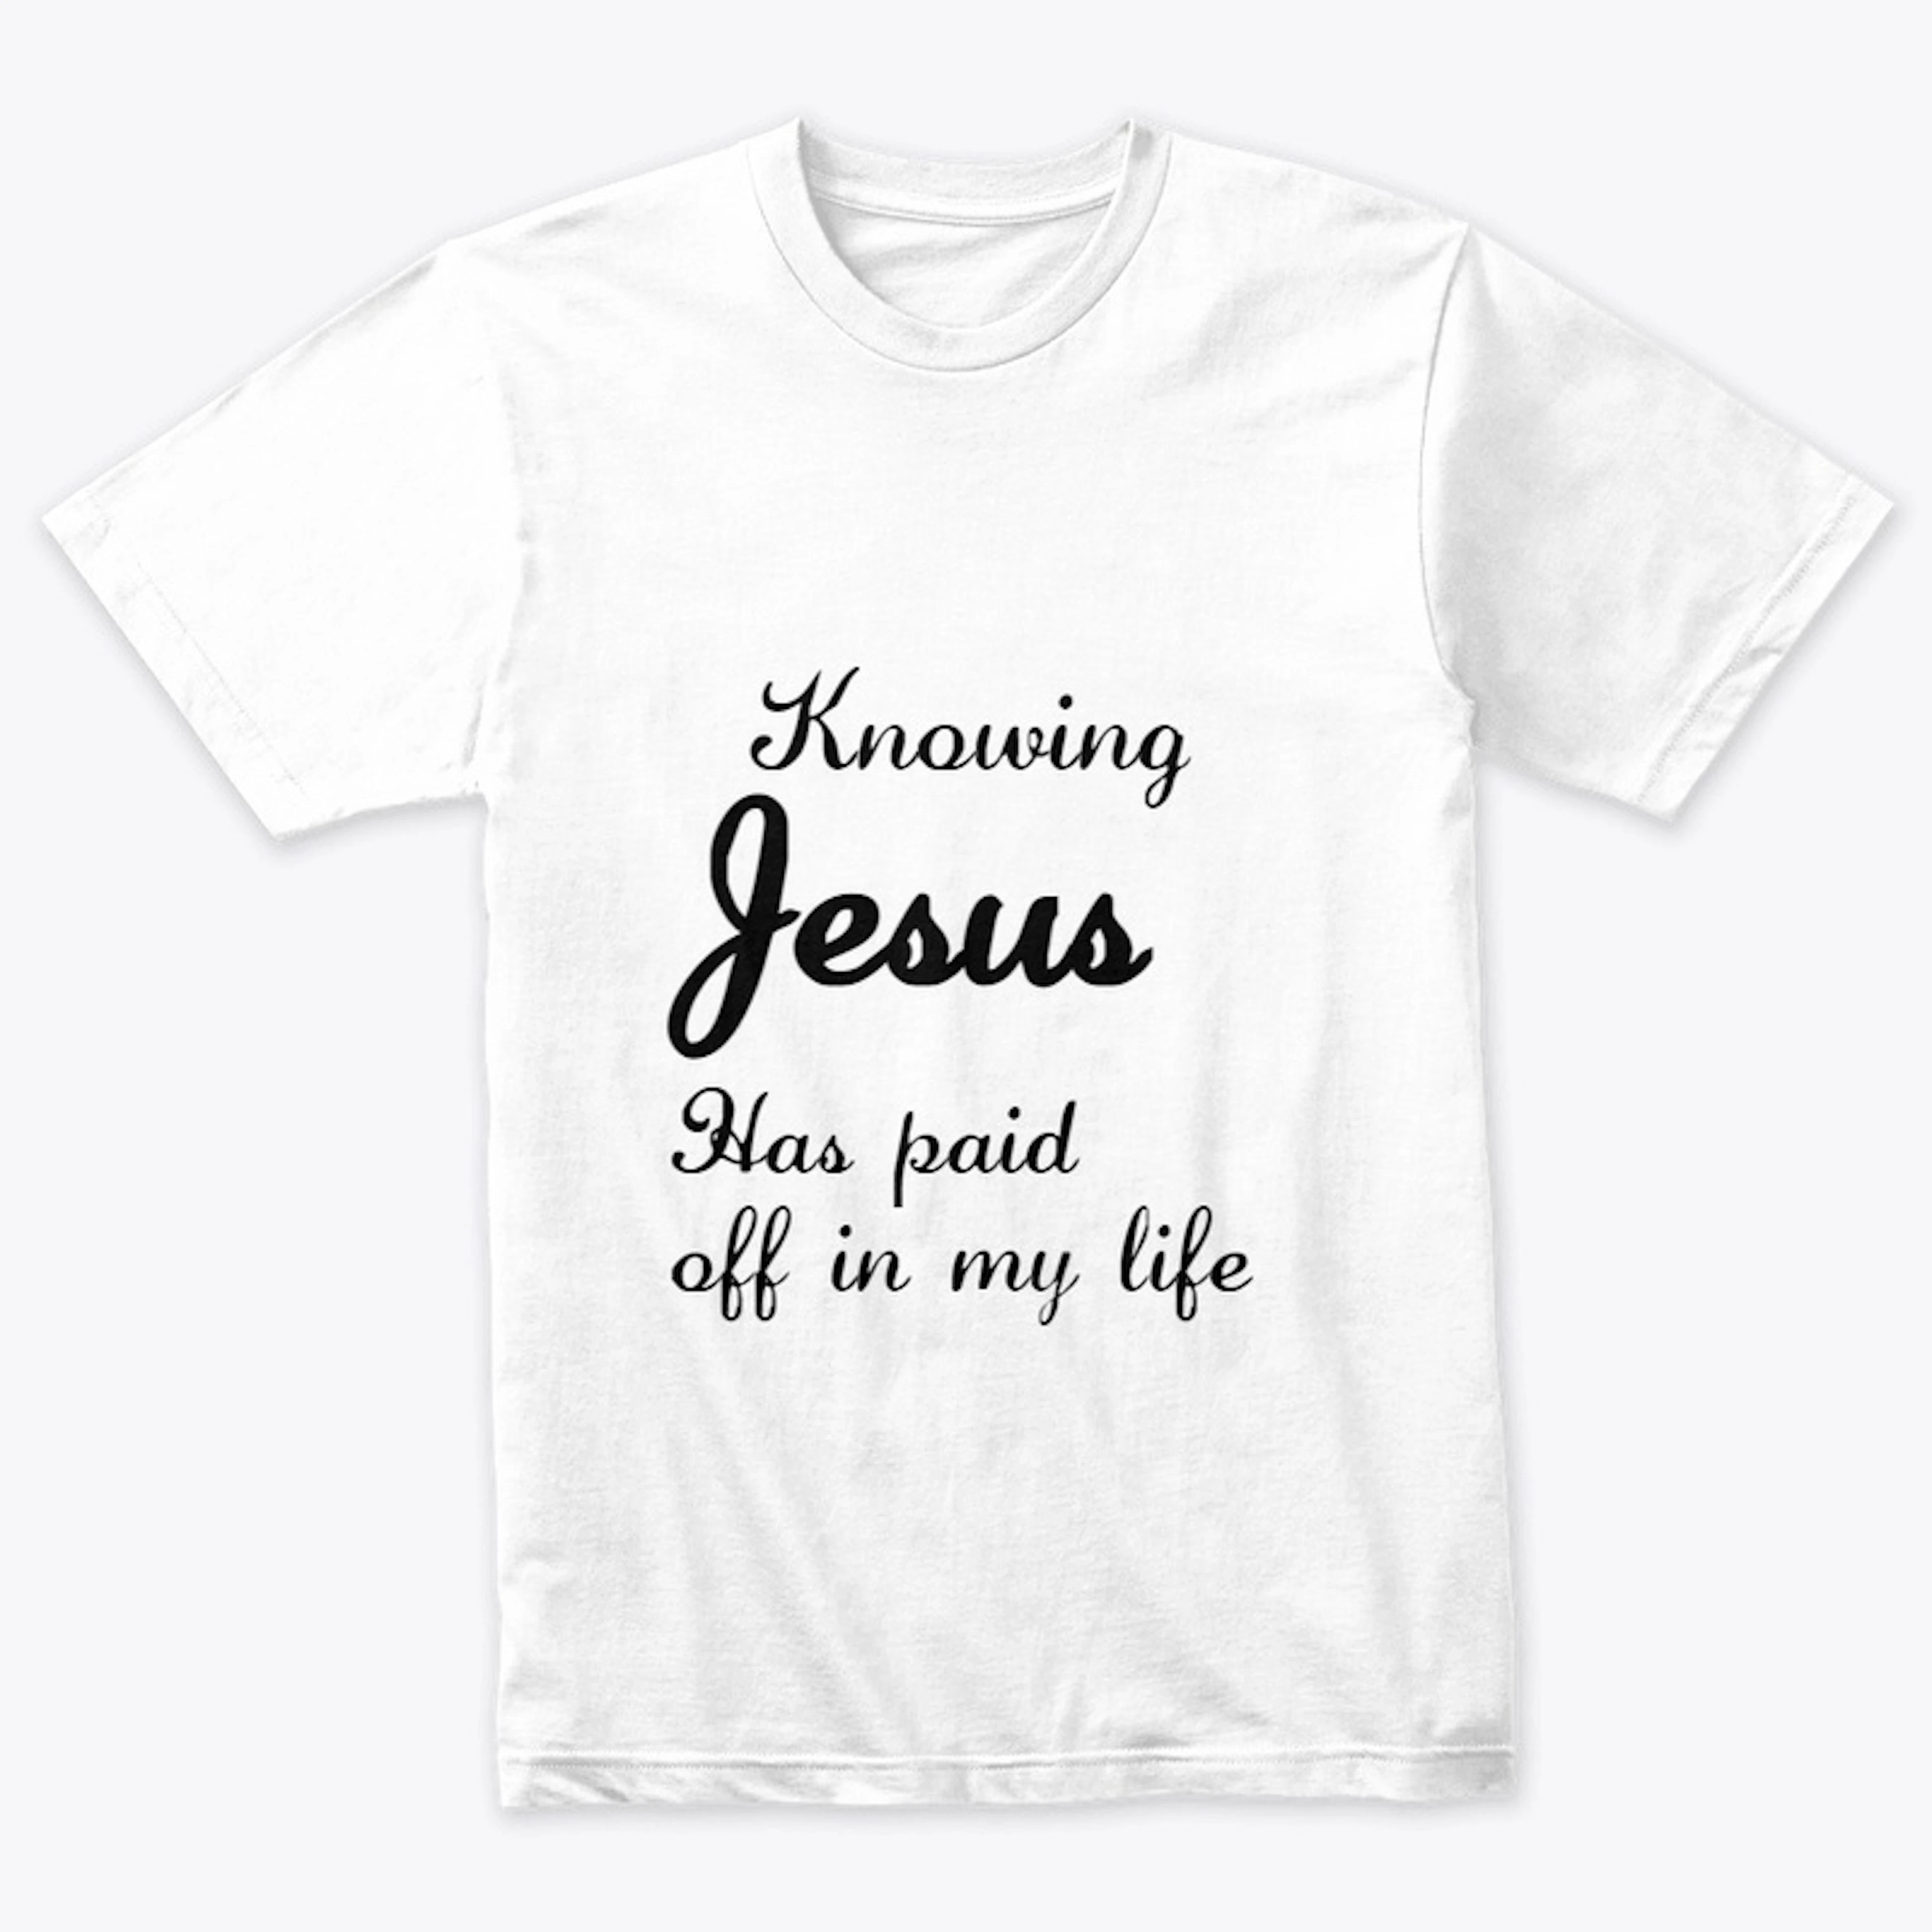 Knowing Jesus